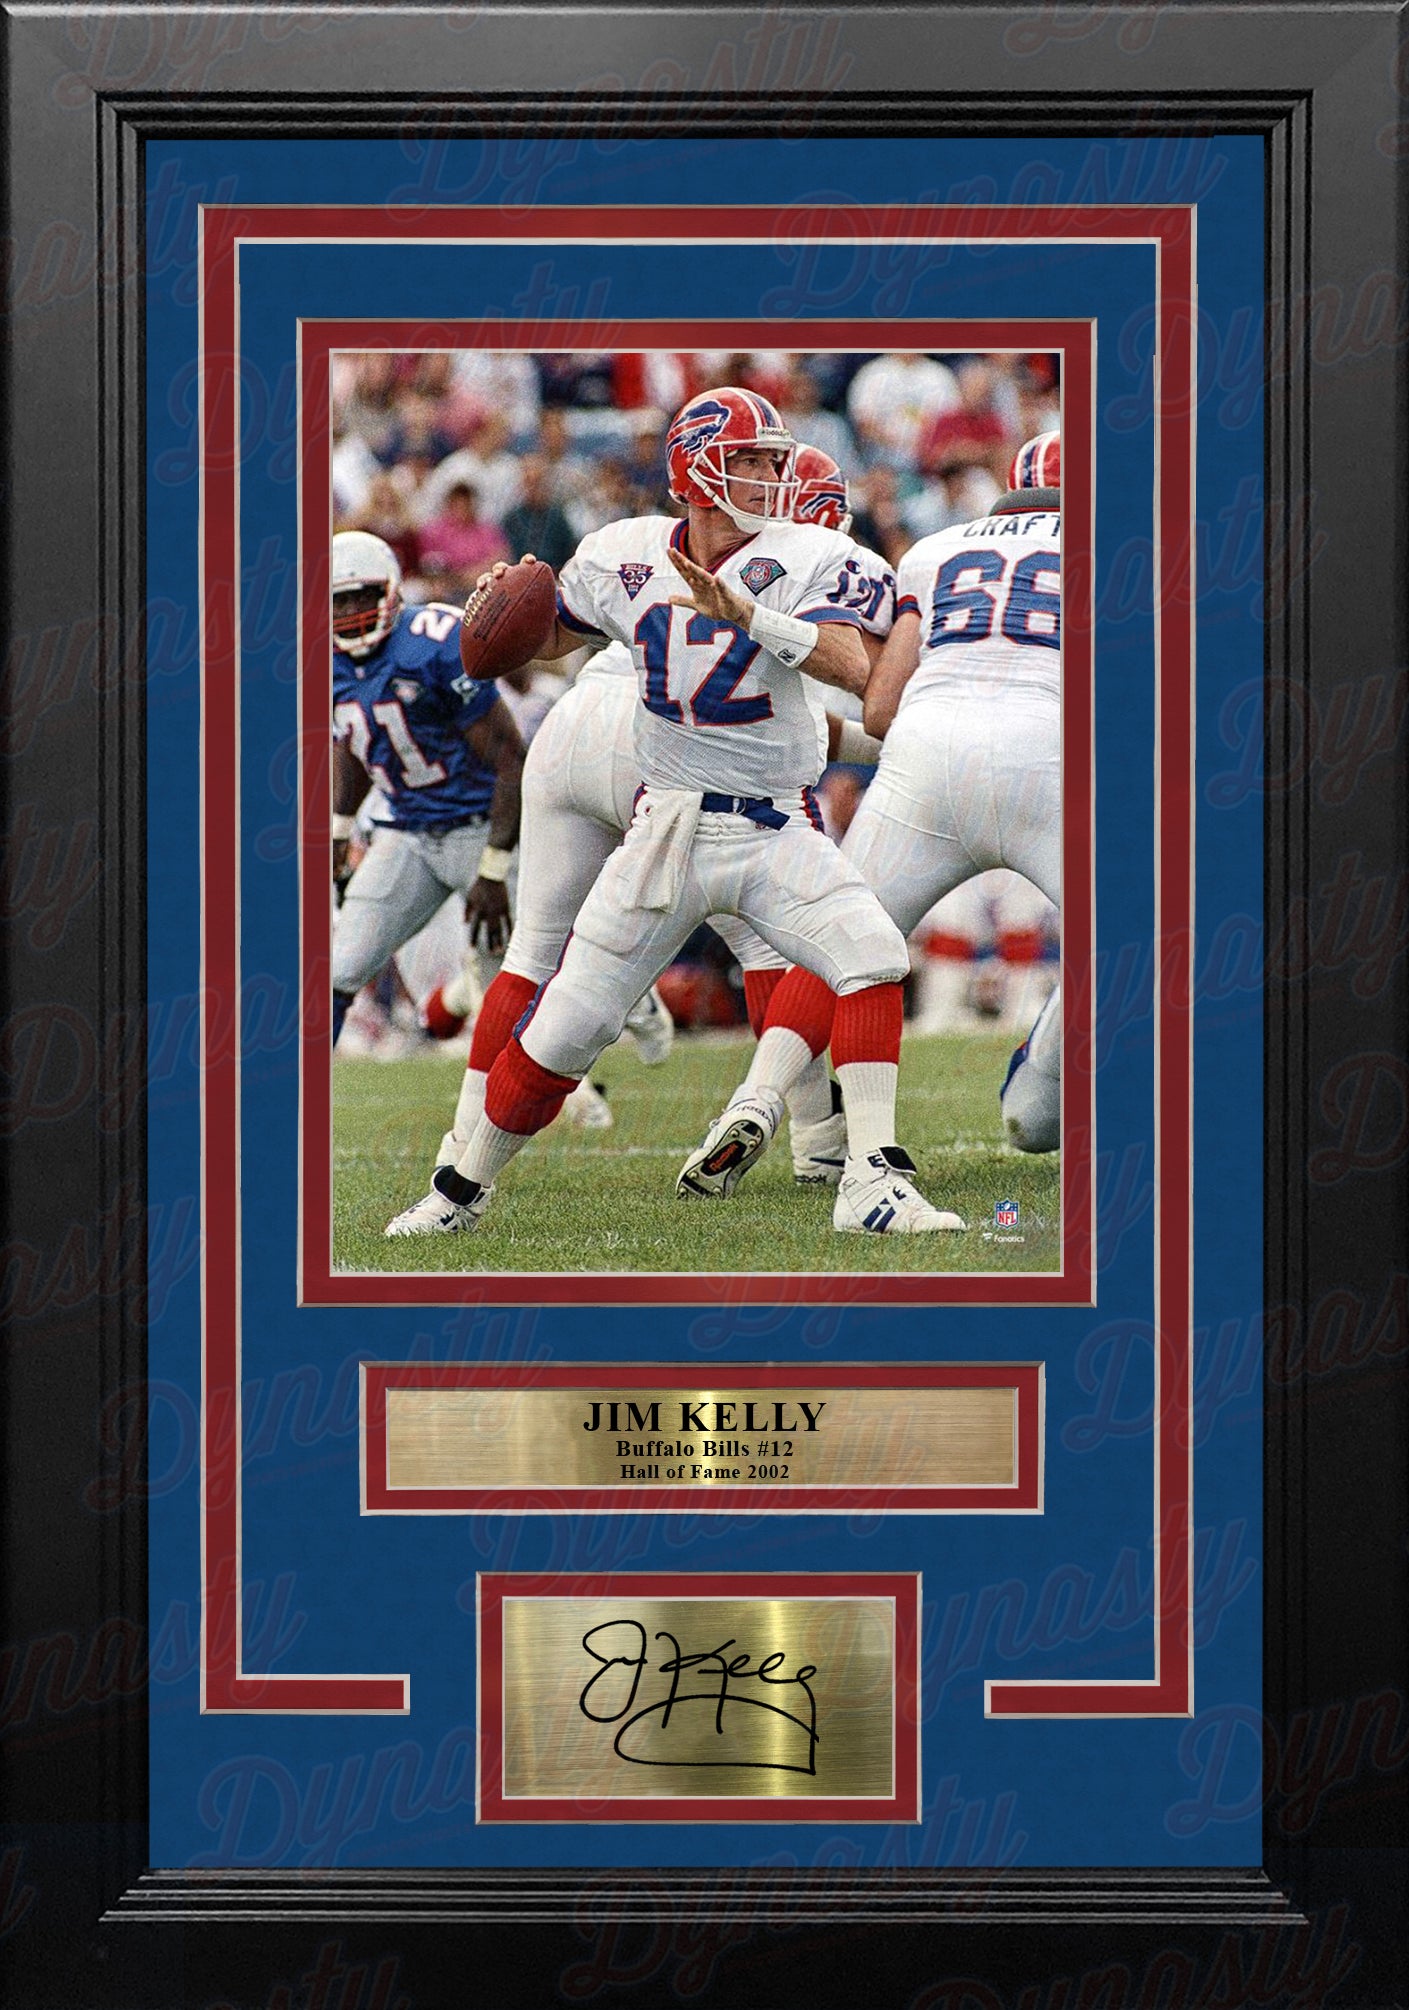 Jim Kelly v. New England Buffalo Bills 8" x 10" Framed Football Photo with Engraved Autograph - Dynasty Sports & Framing 